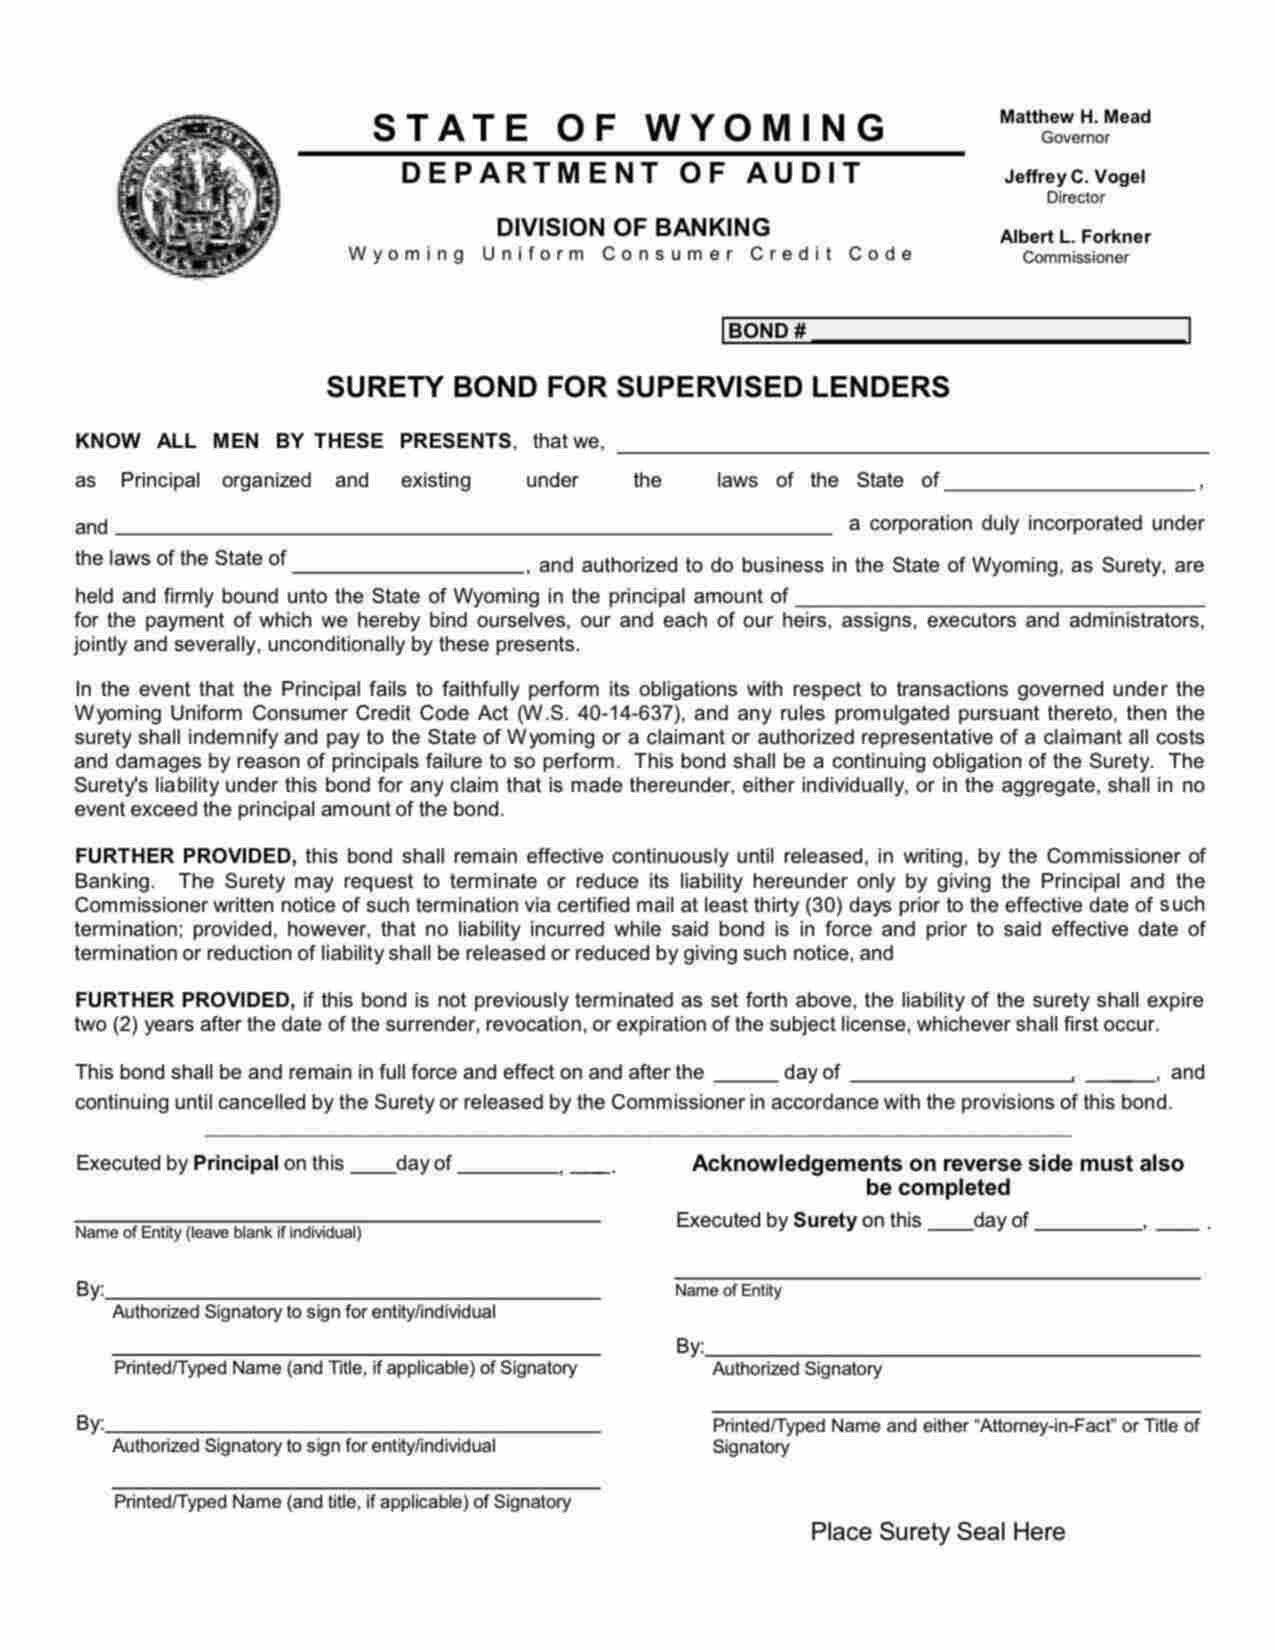 Wyoming Consumer Lender License - Mortgage Loan Originator Bond Bond Form